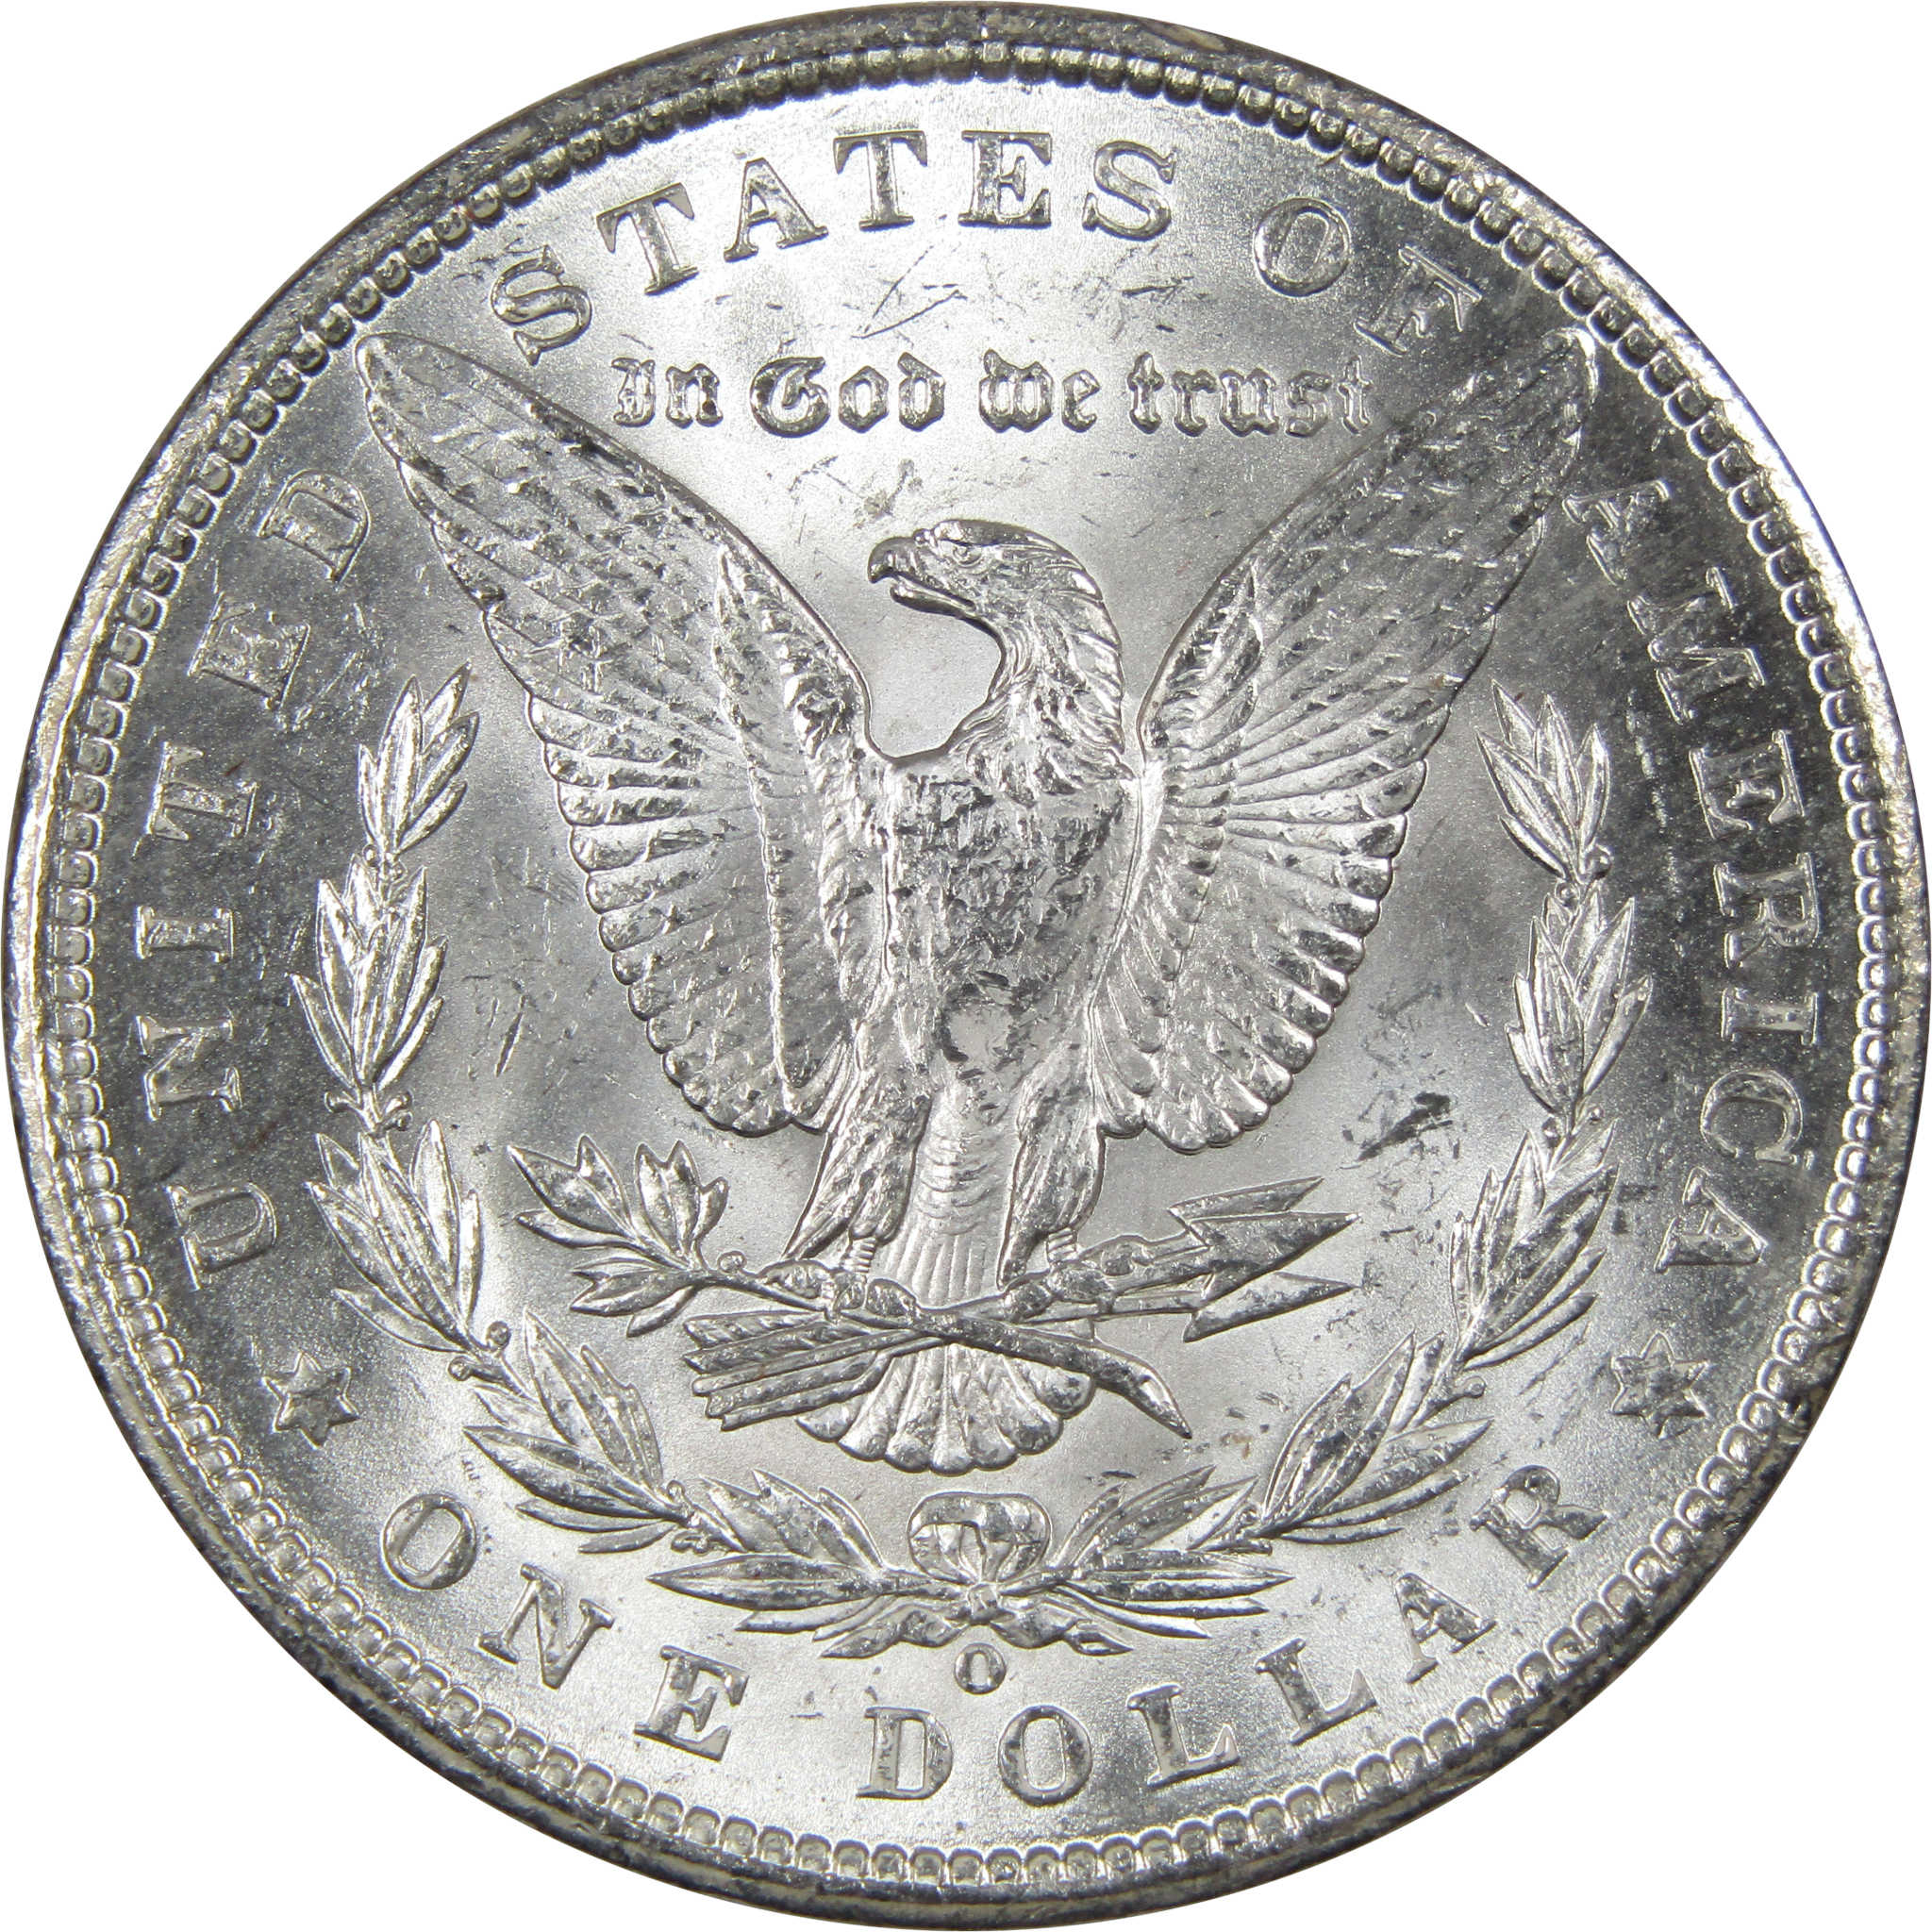 1900 O Morgan Dollar BU Uncirculated Mint State 90% Silver SKU:IPC9795 - Morgan coin - Morgan silver dollar - Morgan silver dollar for sale - Profile Coins &amp; Collectibles